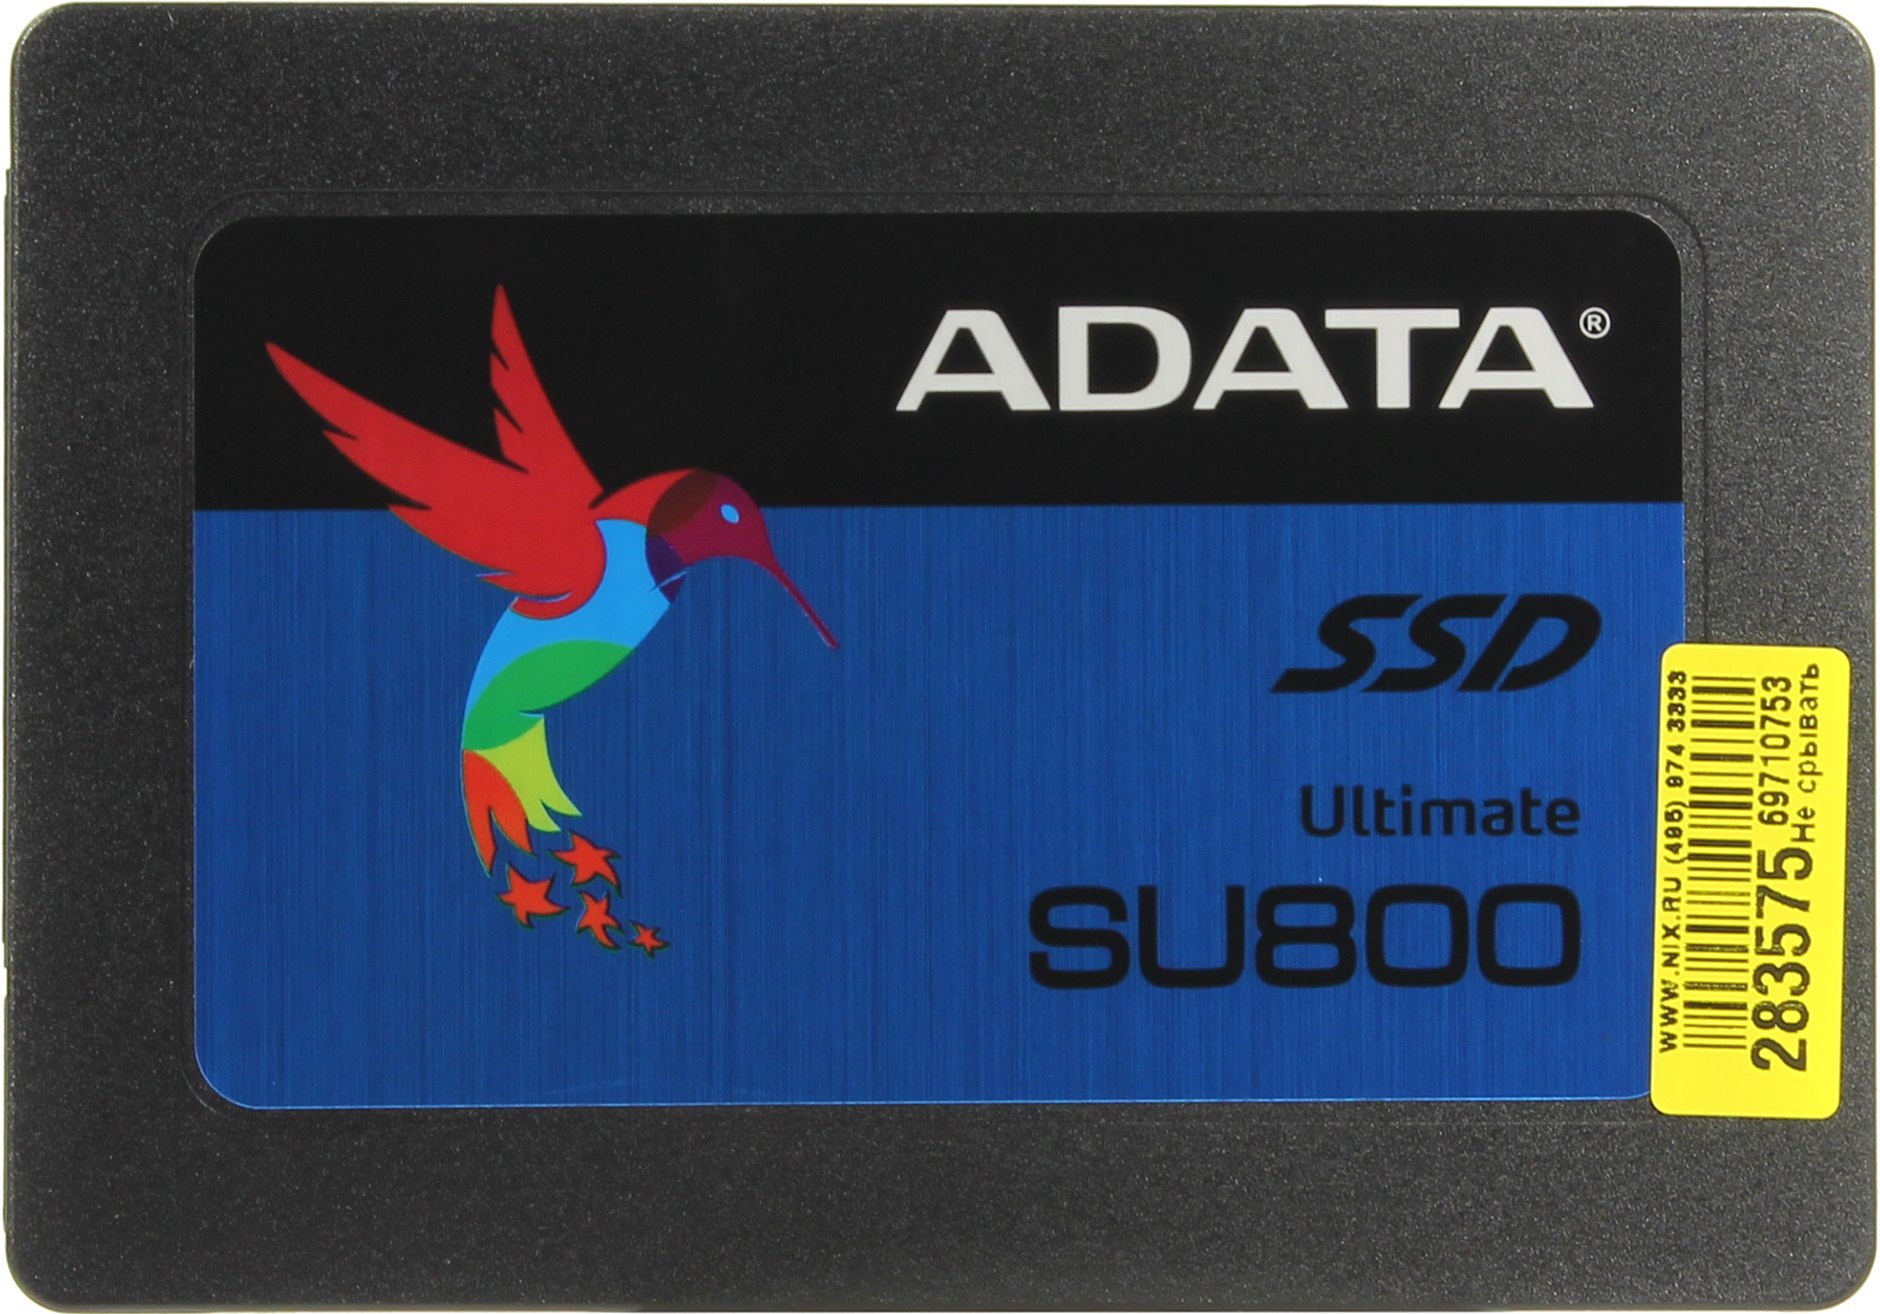 Adata ultimate su800. Твердотельный накопитель ADATA Ultimate su800 256gb. A-data asu800ss-256gt-c. A-data SSD 256gb su800 asu800ss-256gt-c {SATA3.0, 7mm}. SSD A data 256gb.